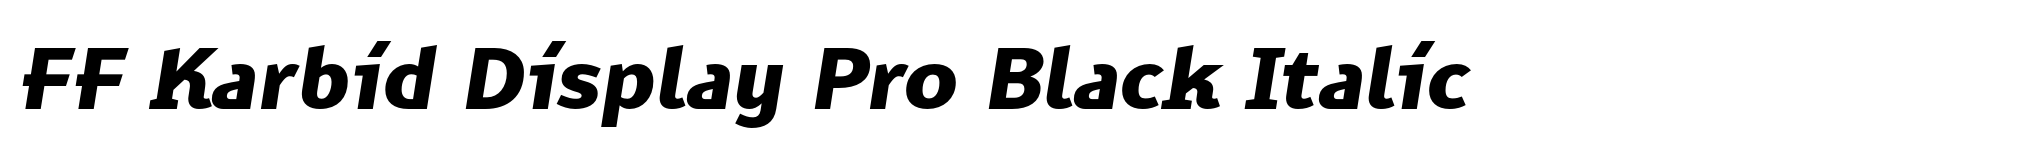 FF Karbid Display Pro Black Italic image